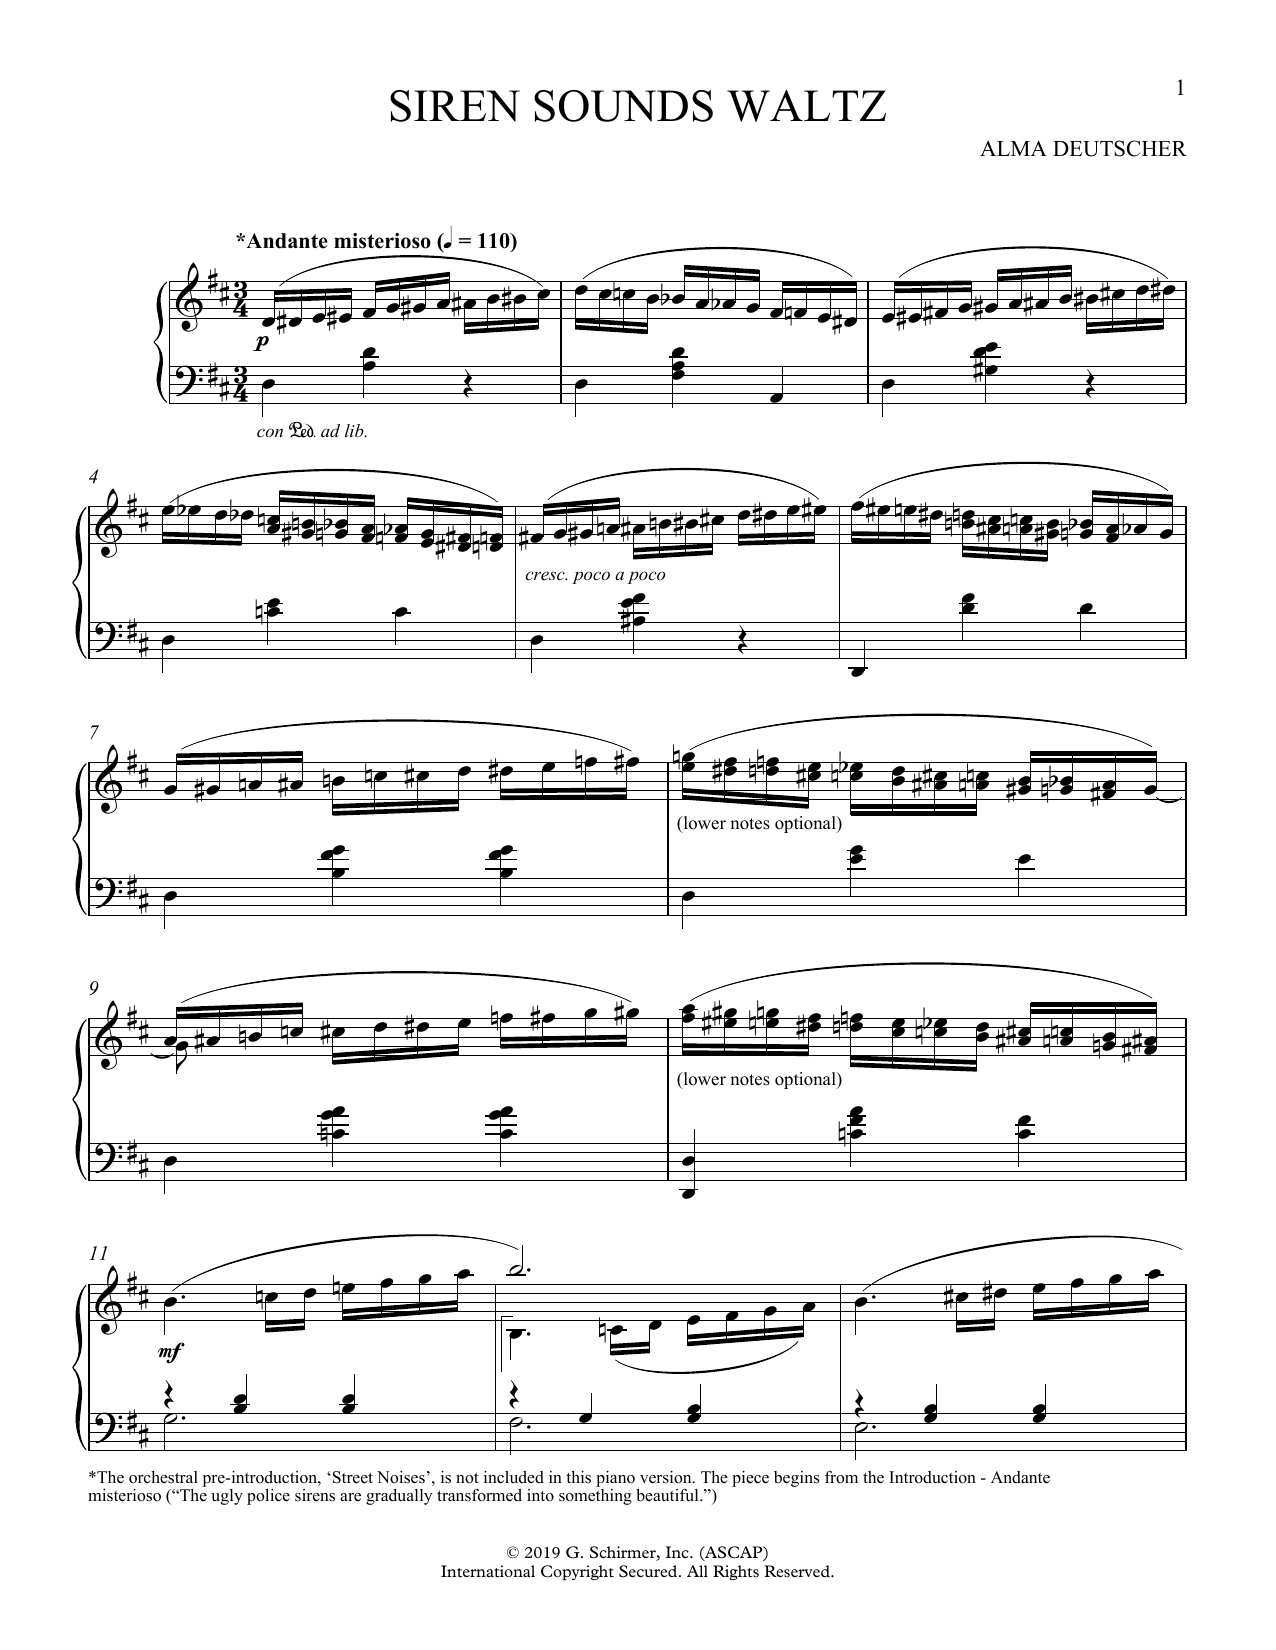 Alma Deutscher Siren Sounds Waltz (I-VI) Sheet Music Notes & Chords for Piano Solo - Download or Print PDF